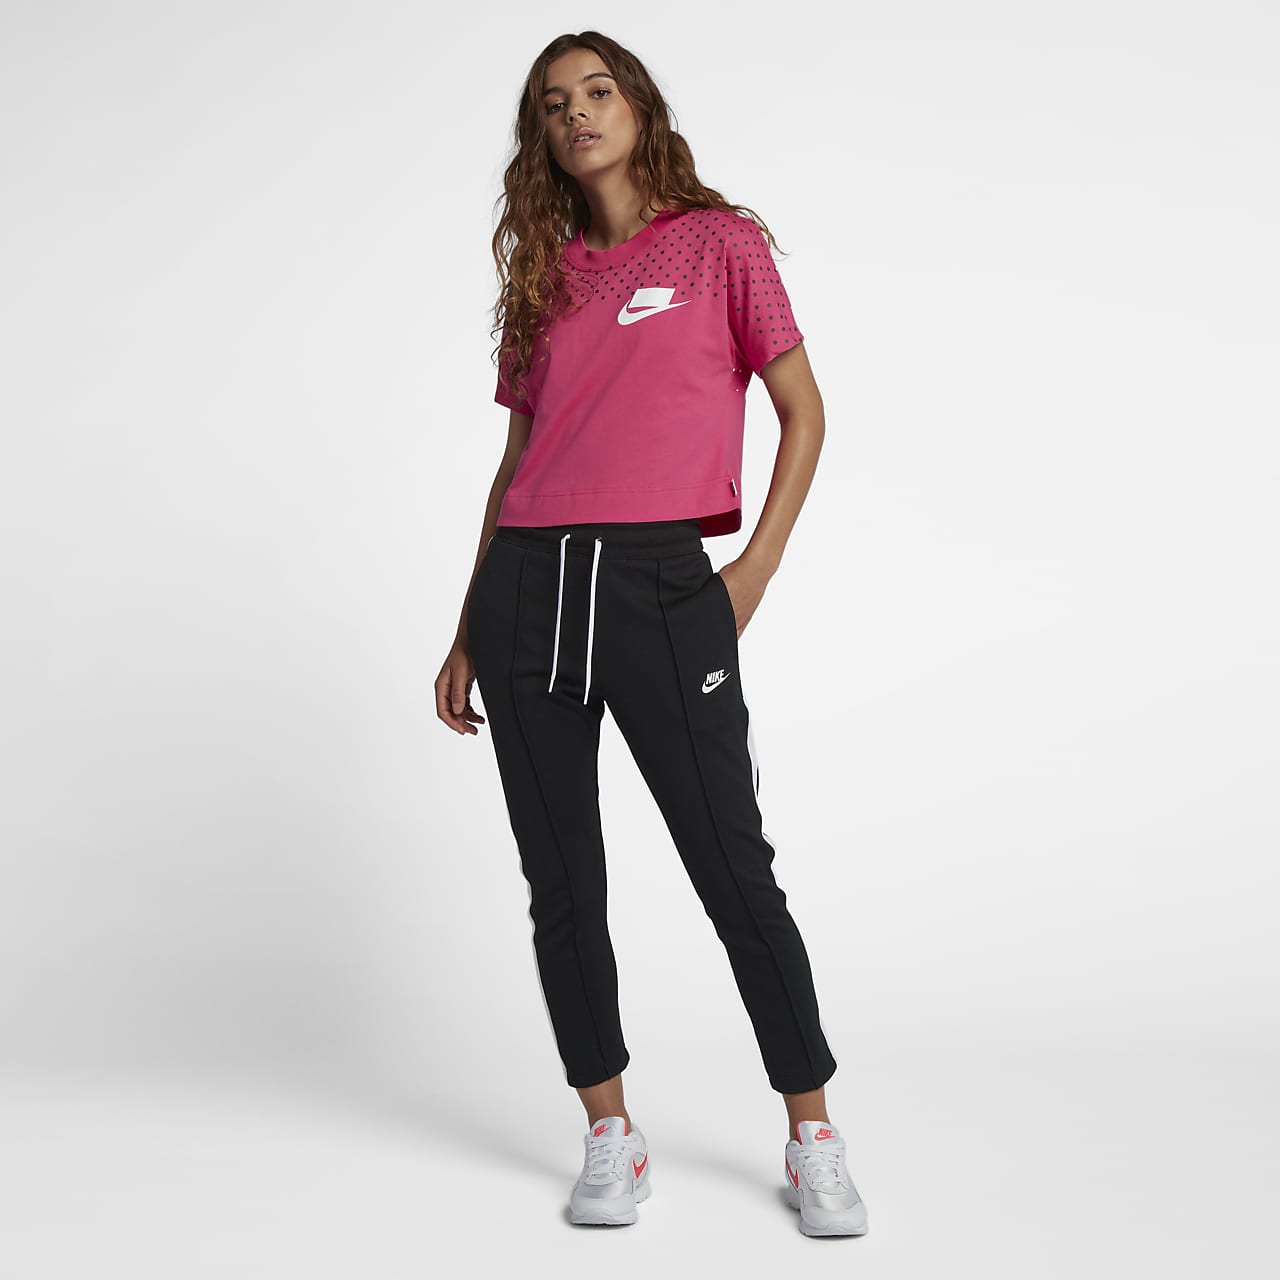 Women's Nike Tops